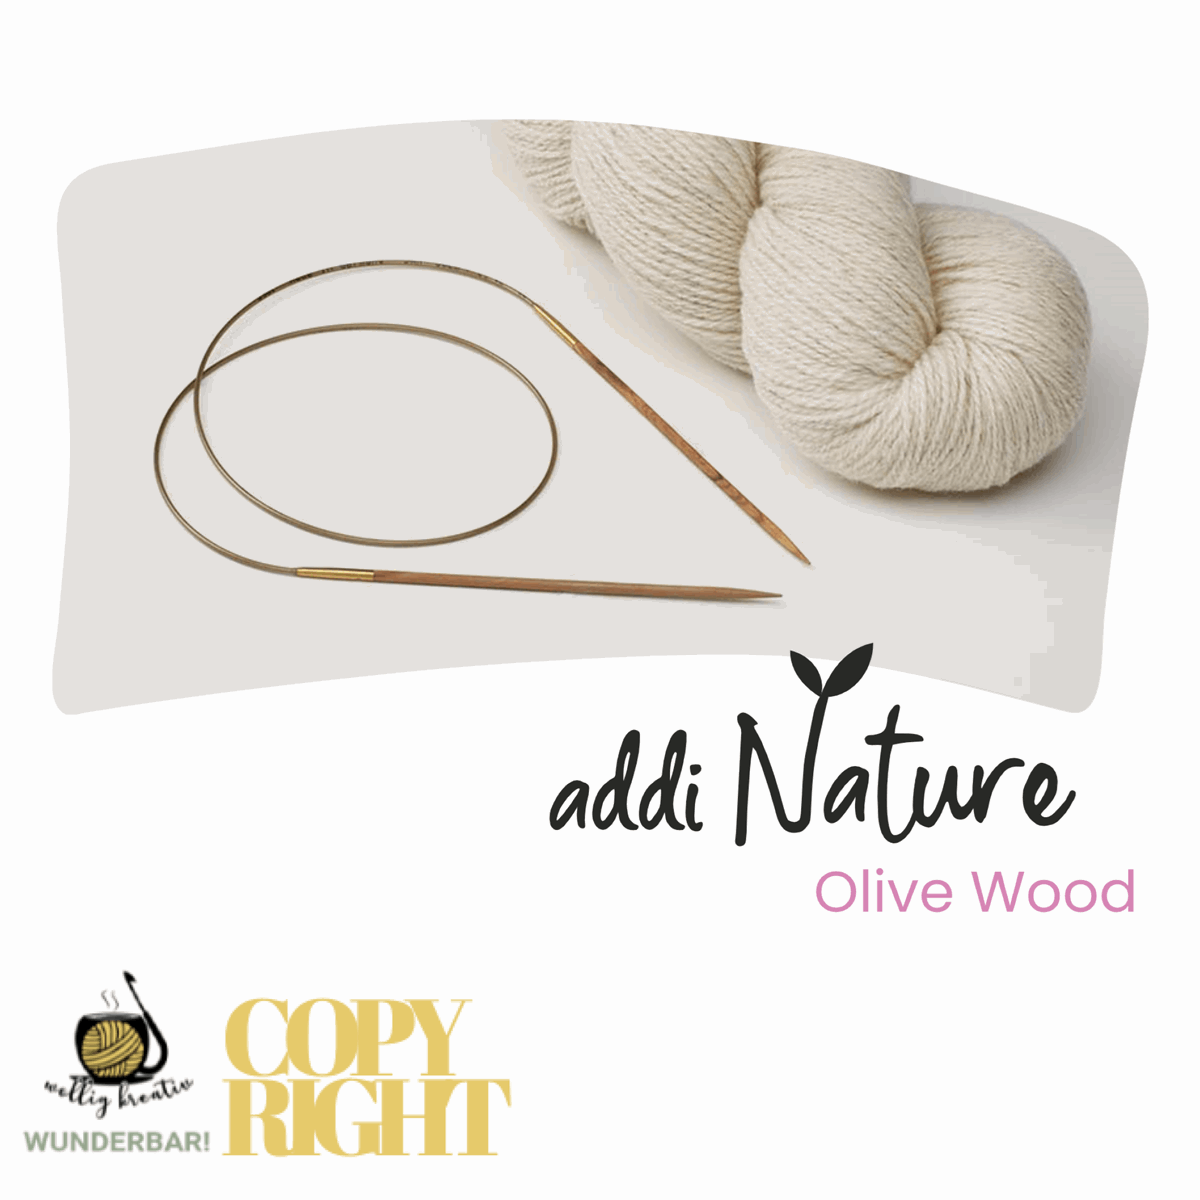 Addi, Nature Olive Wood Rundstricknadel, 65757, Größe 4,5, Länge 40